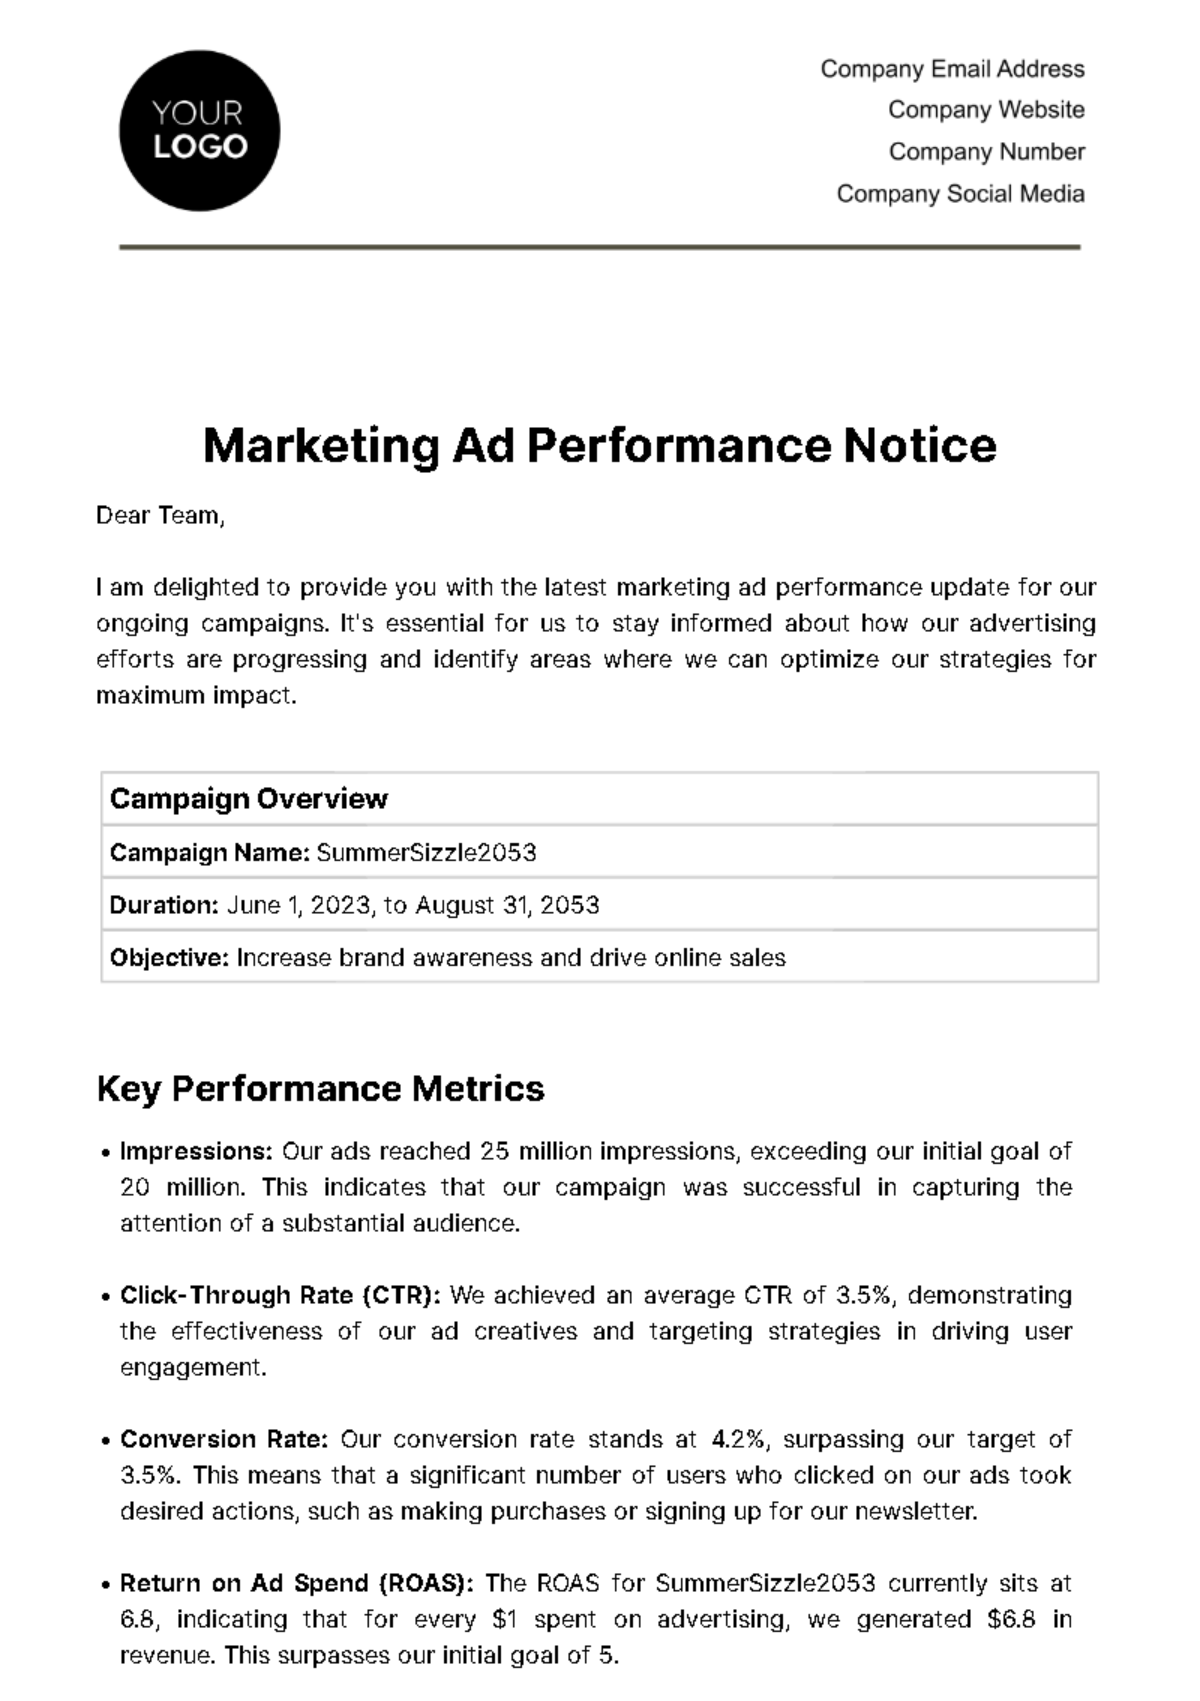 Free Marketing Ad Performance Notice Template